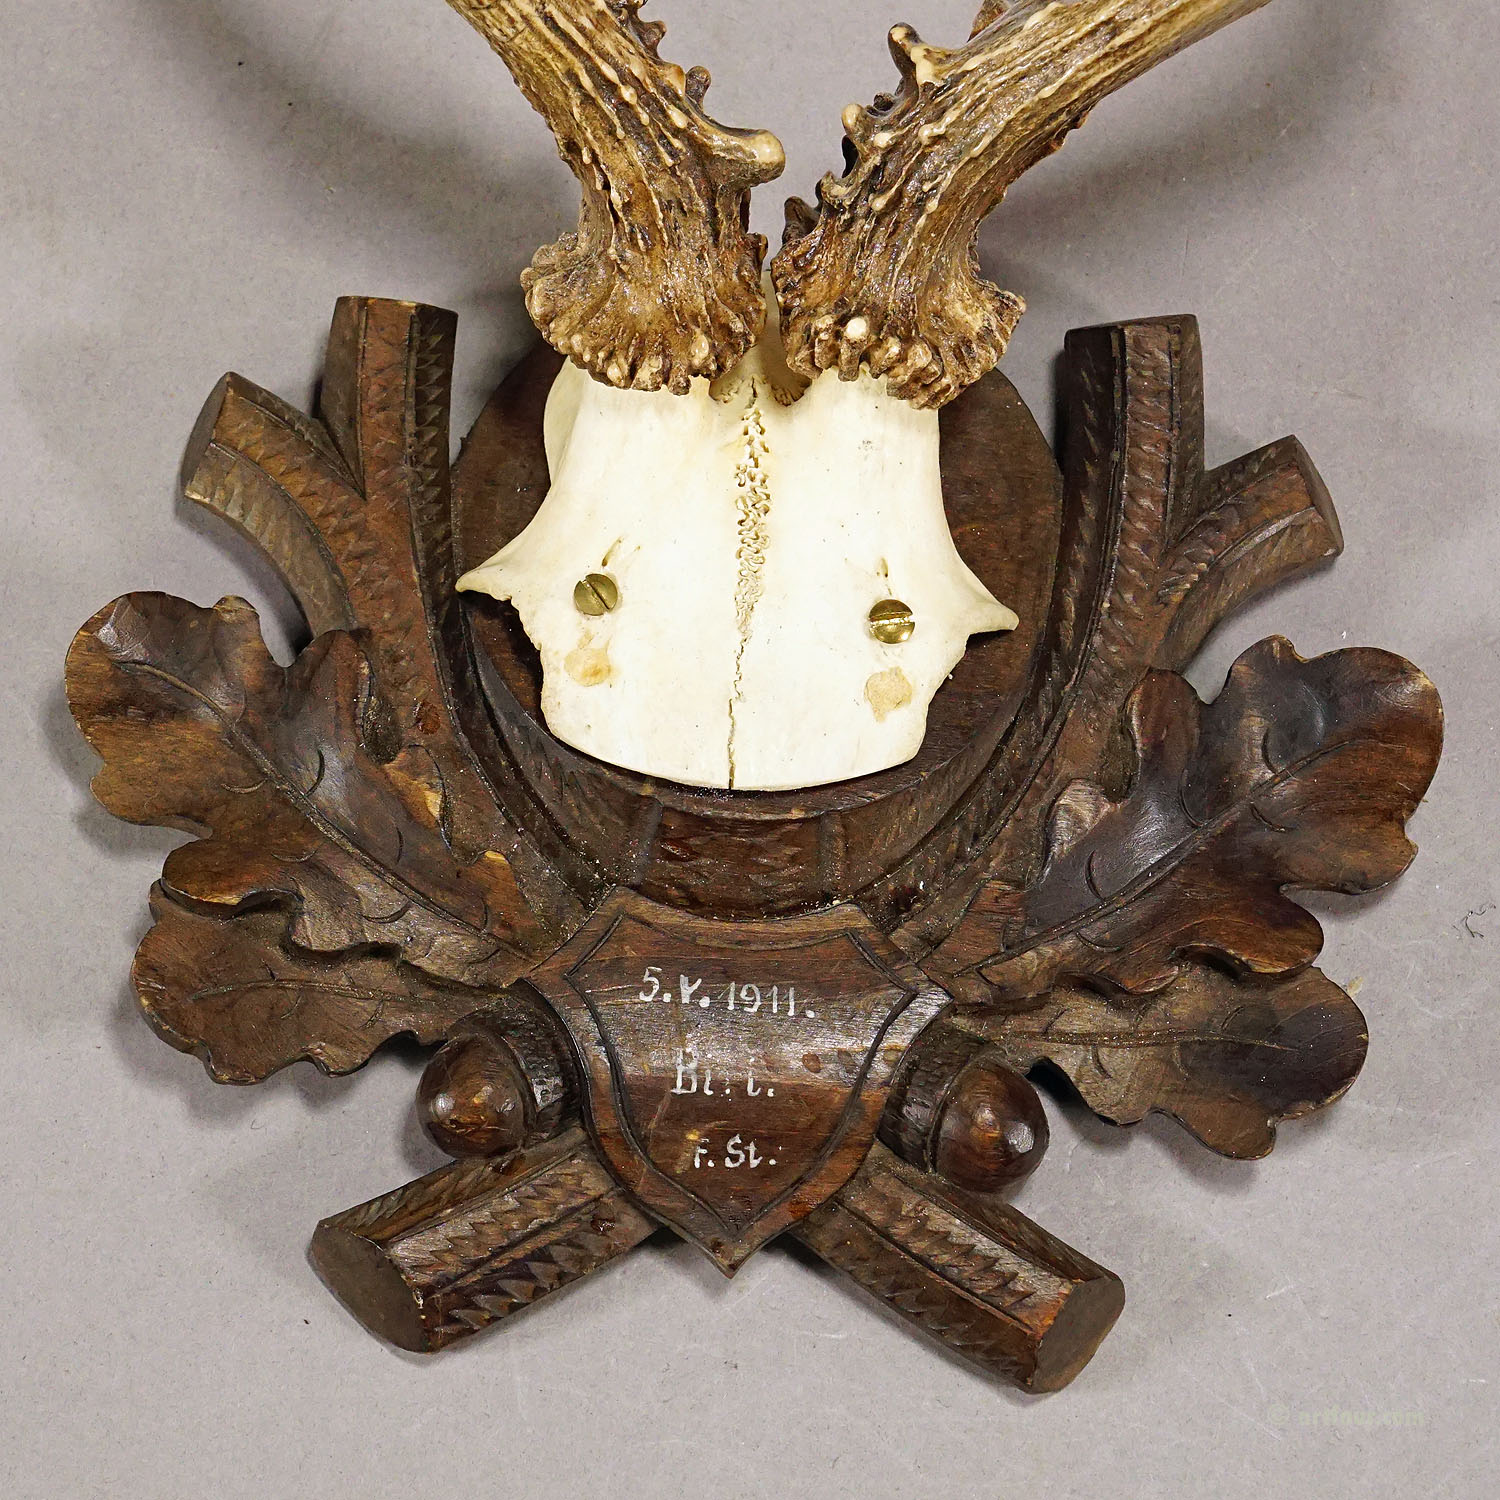 Great Roe Deer Trophy Mount on Wooden Carved Plaque 1911